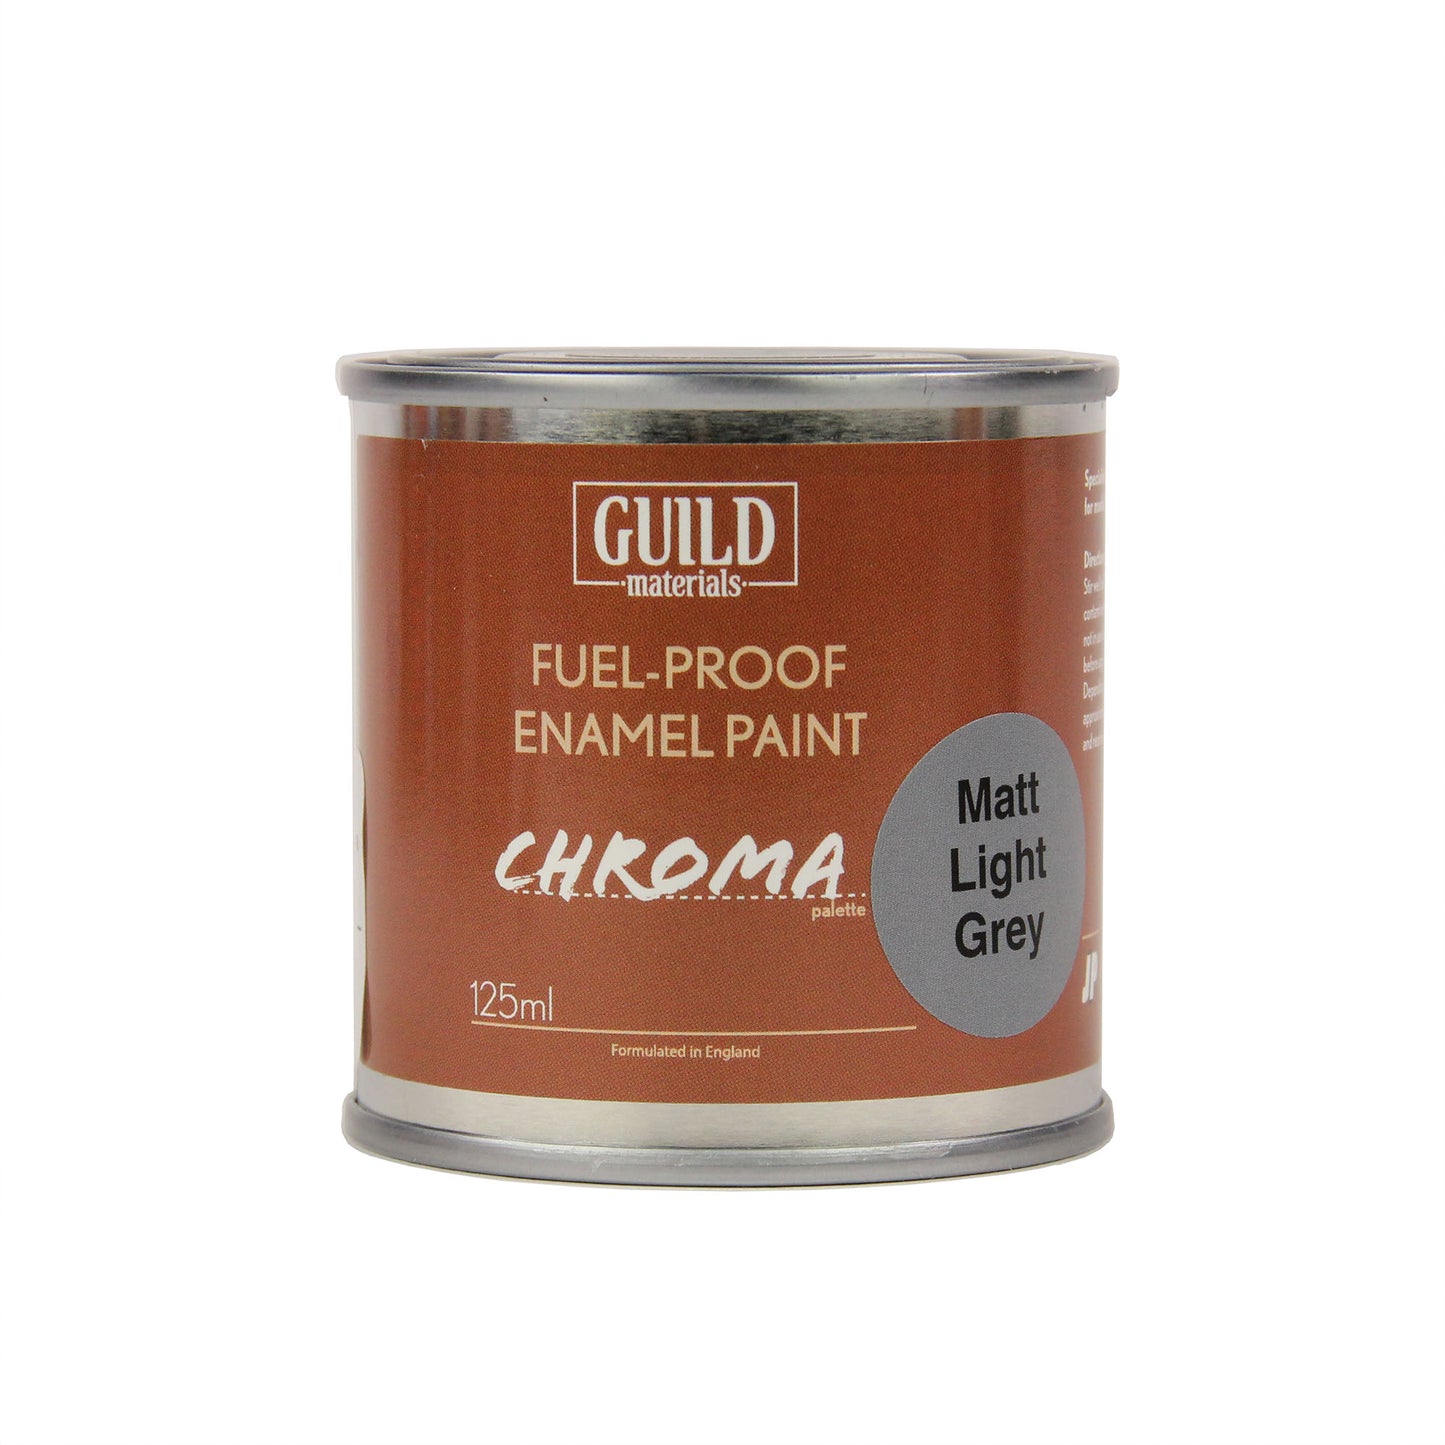 Chroma Enamel Fuelproof Paint Matt Light Grey (125ml Tin)